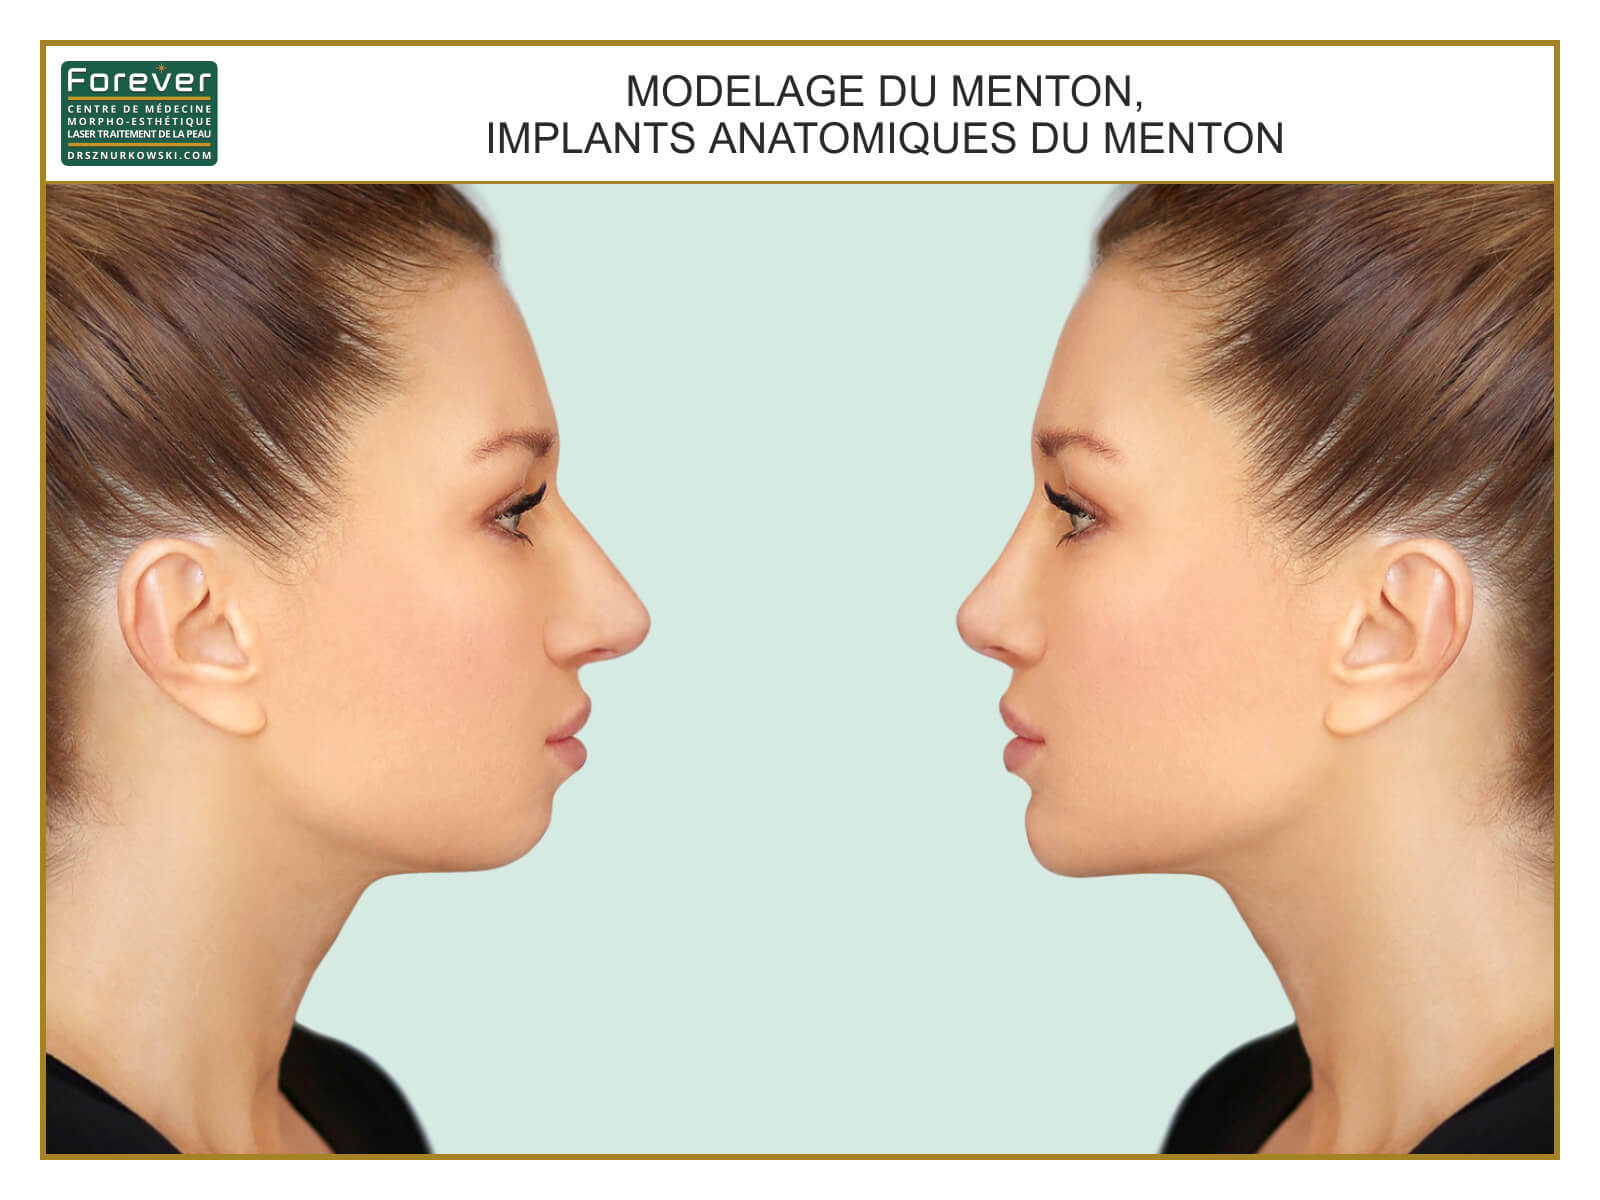 Facial Slimming, Anatomical Implants, Chin Augmentation (80x60) FR.jpg